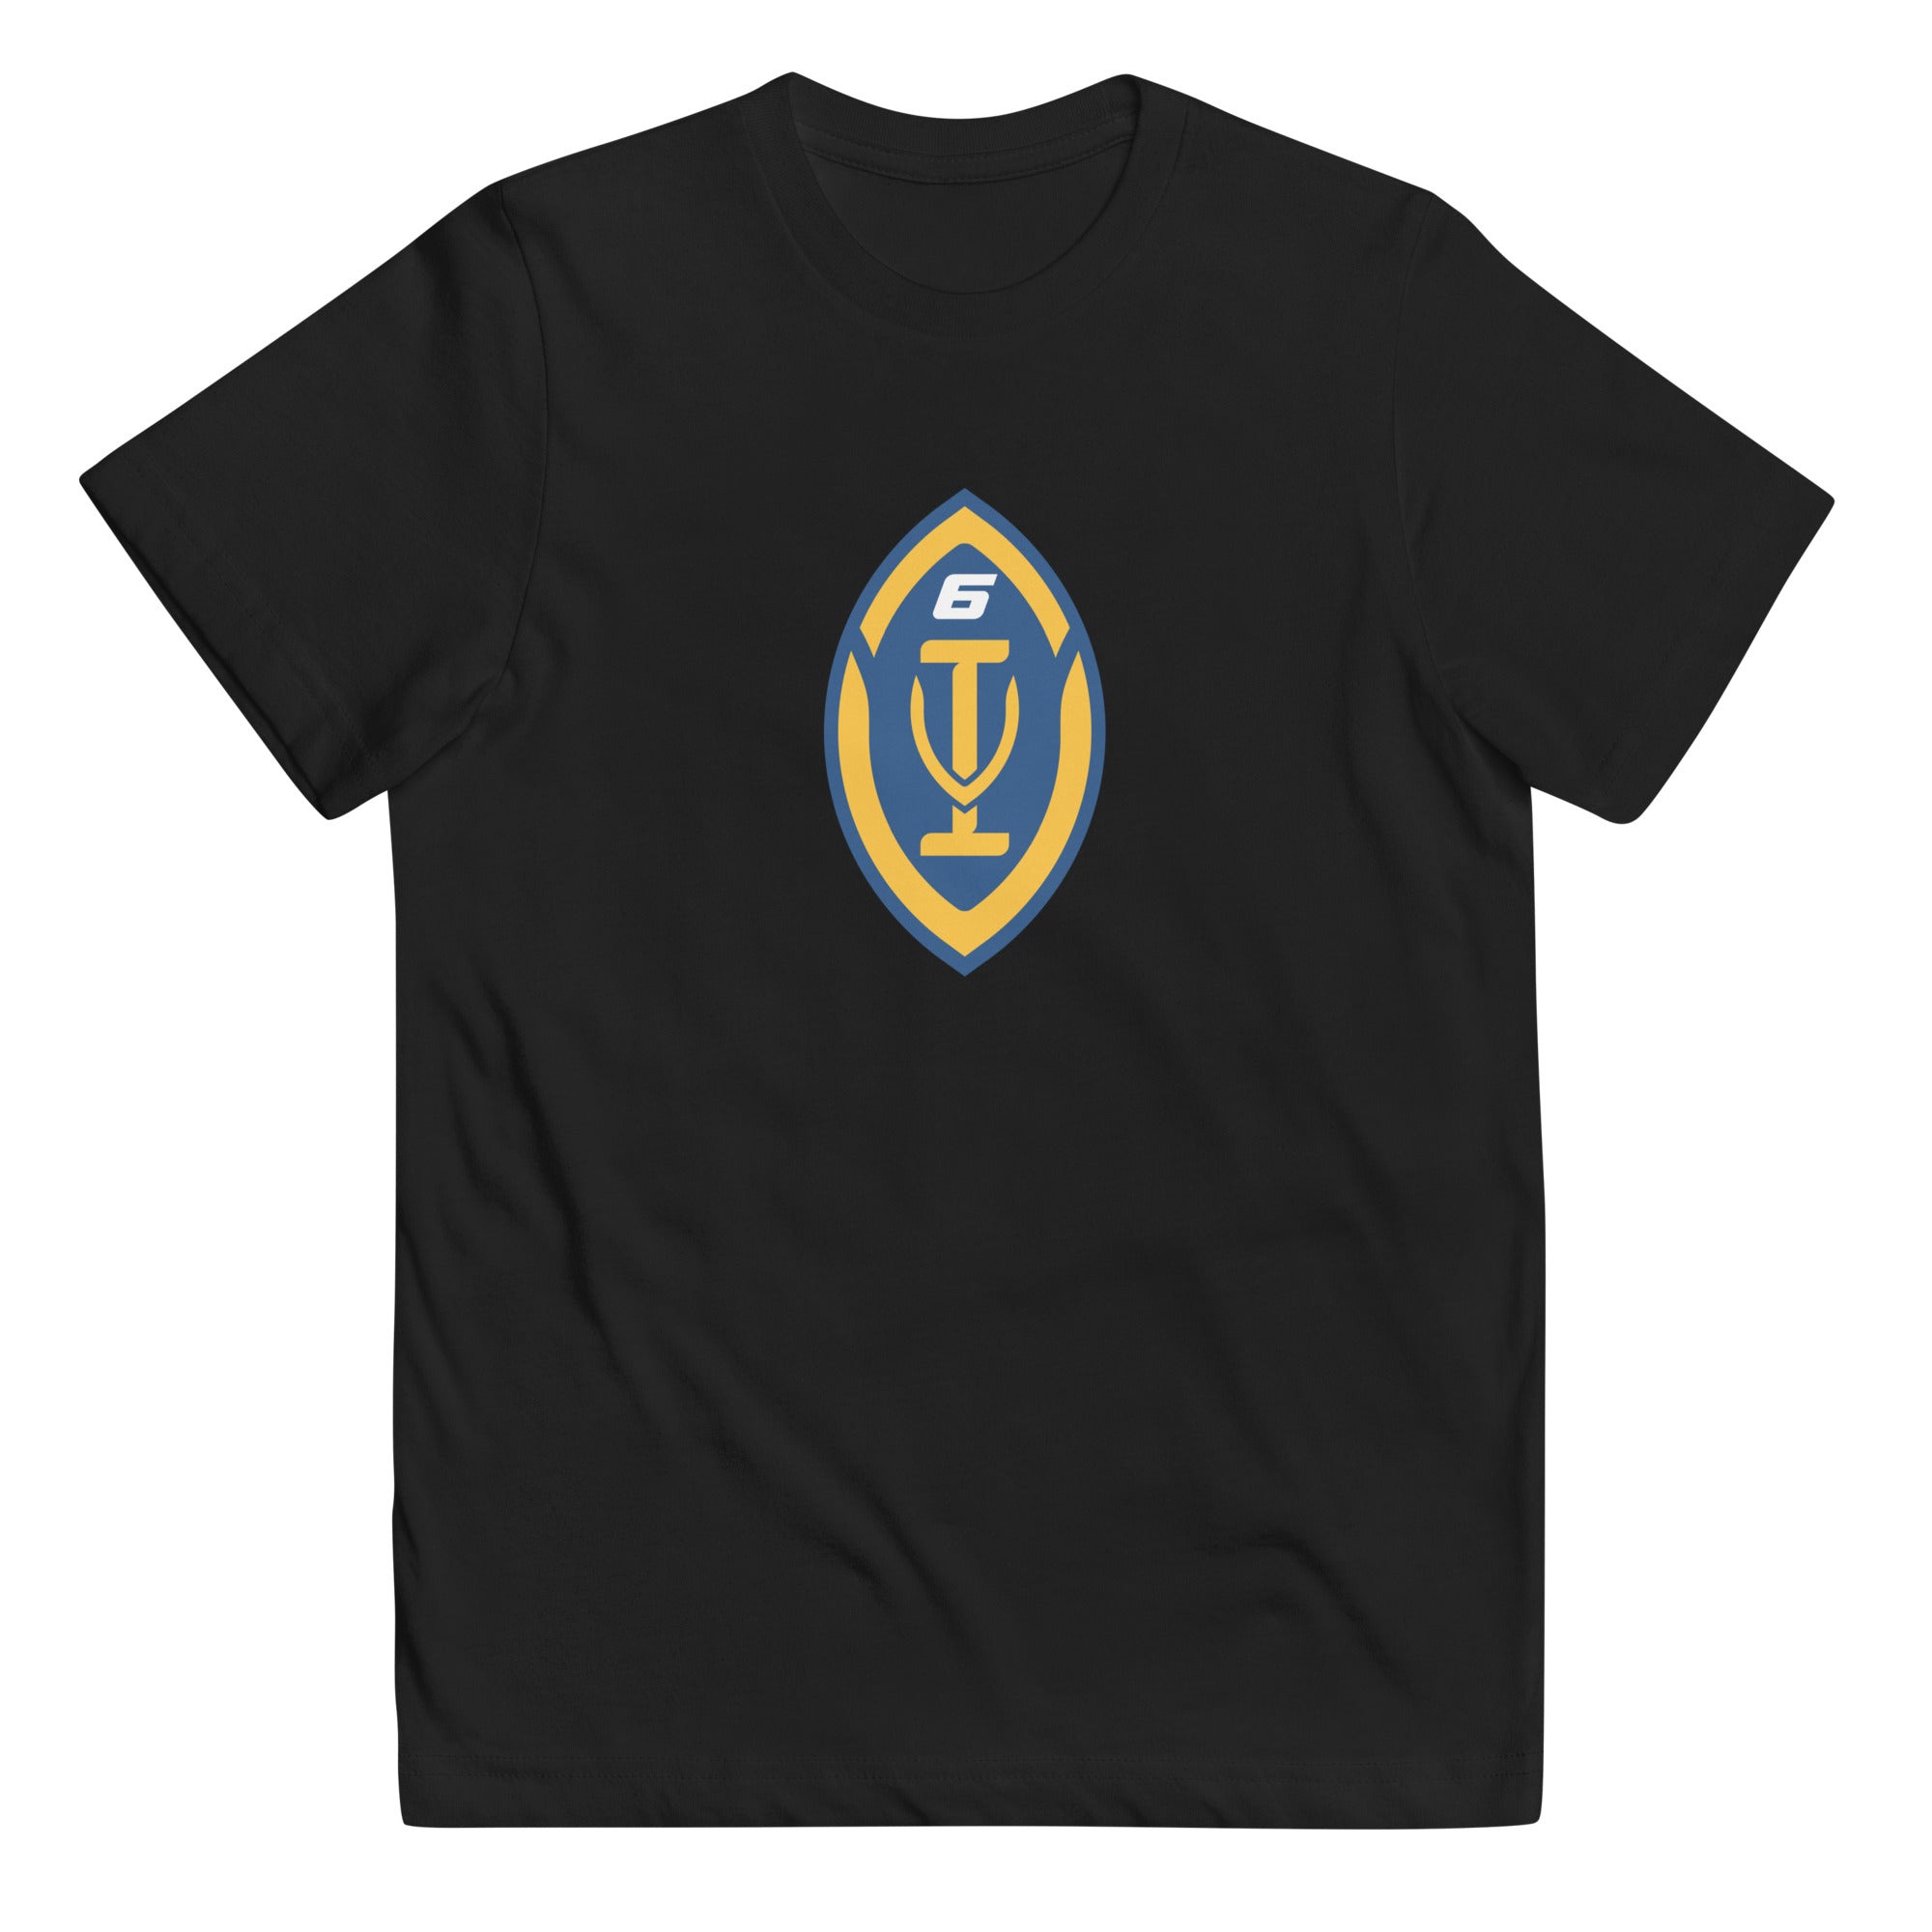 Isaac Vance IV6 Brand Youth T-Shirt